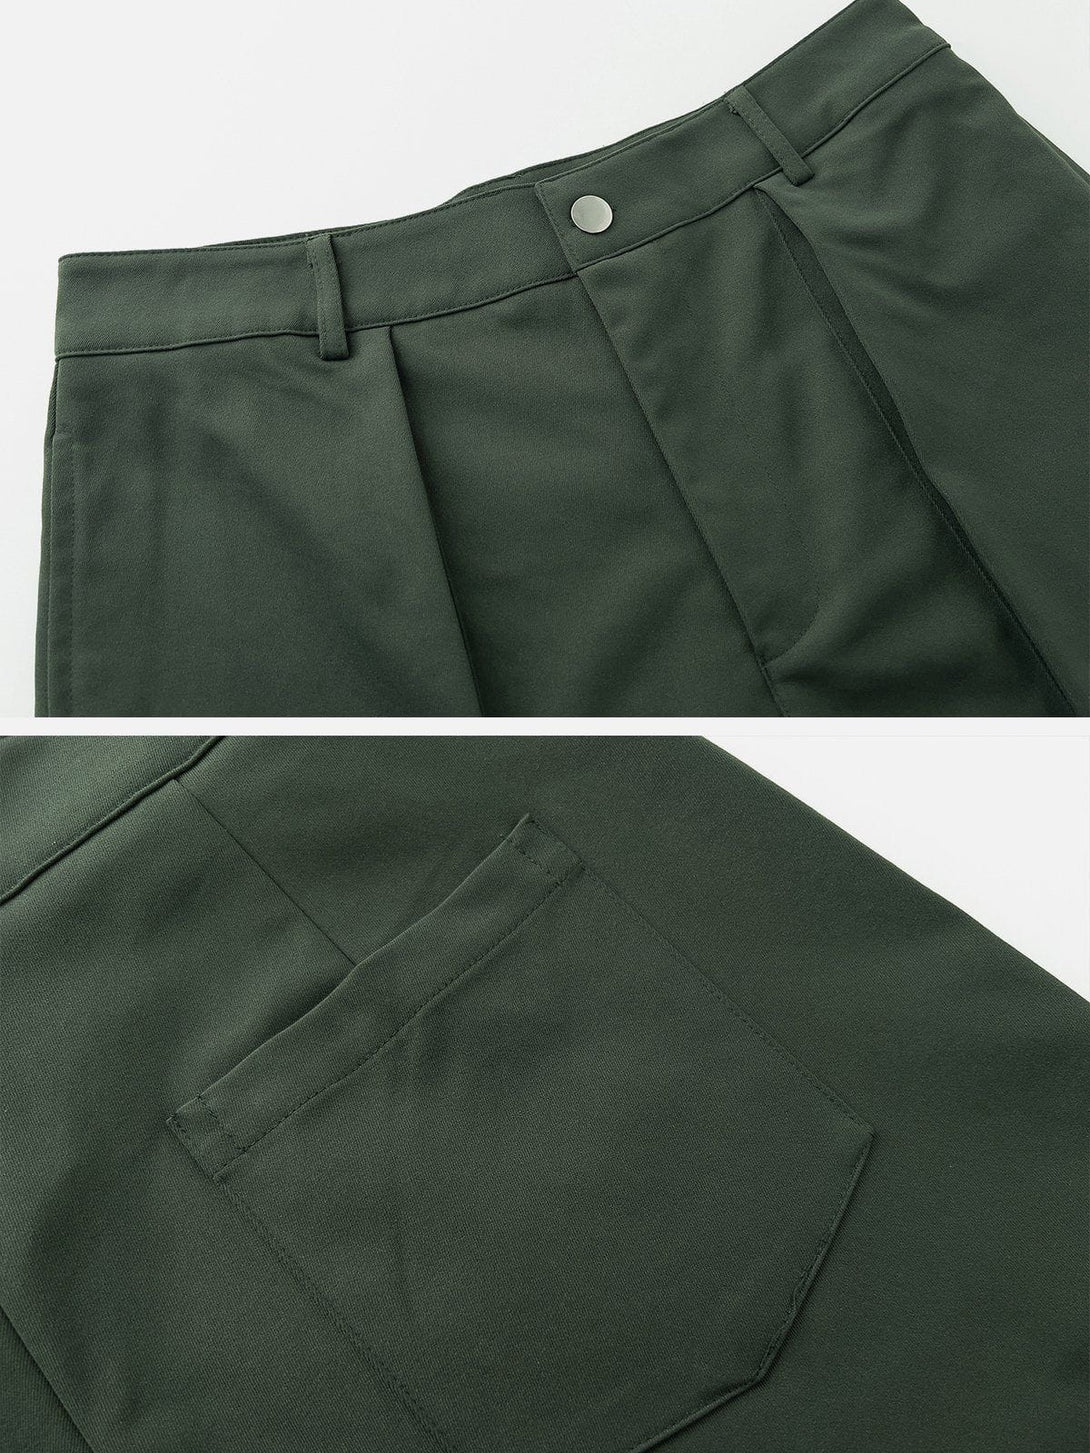 Levefly - Large Pocket Zip Pants - Streetwear Fashion - levefly.com